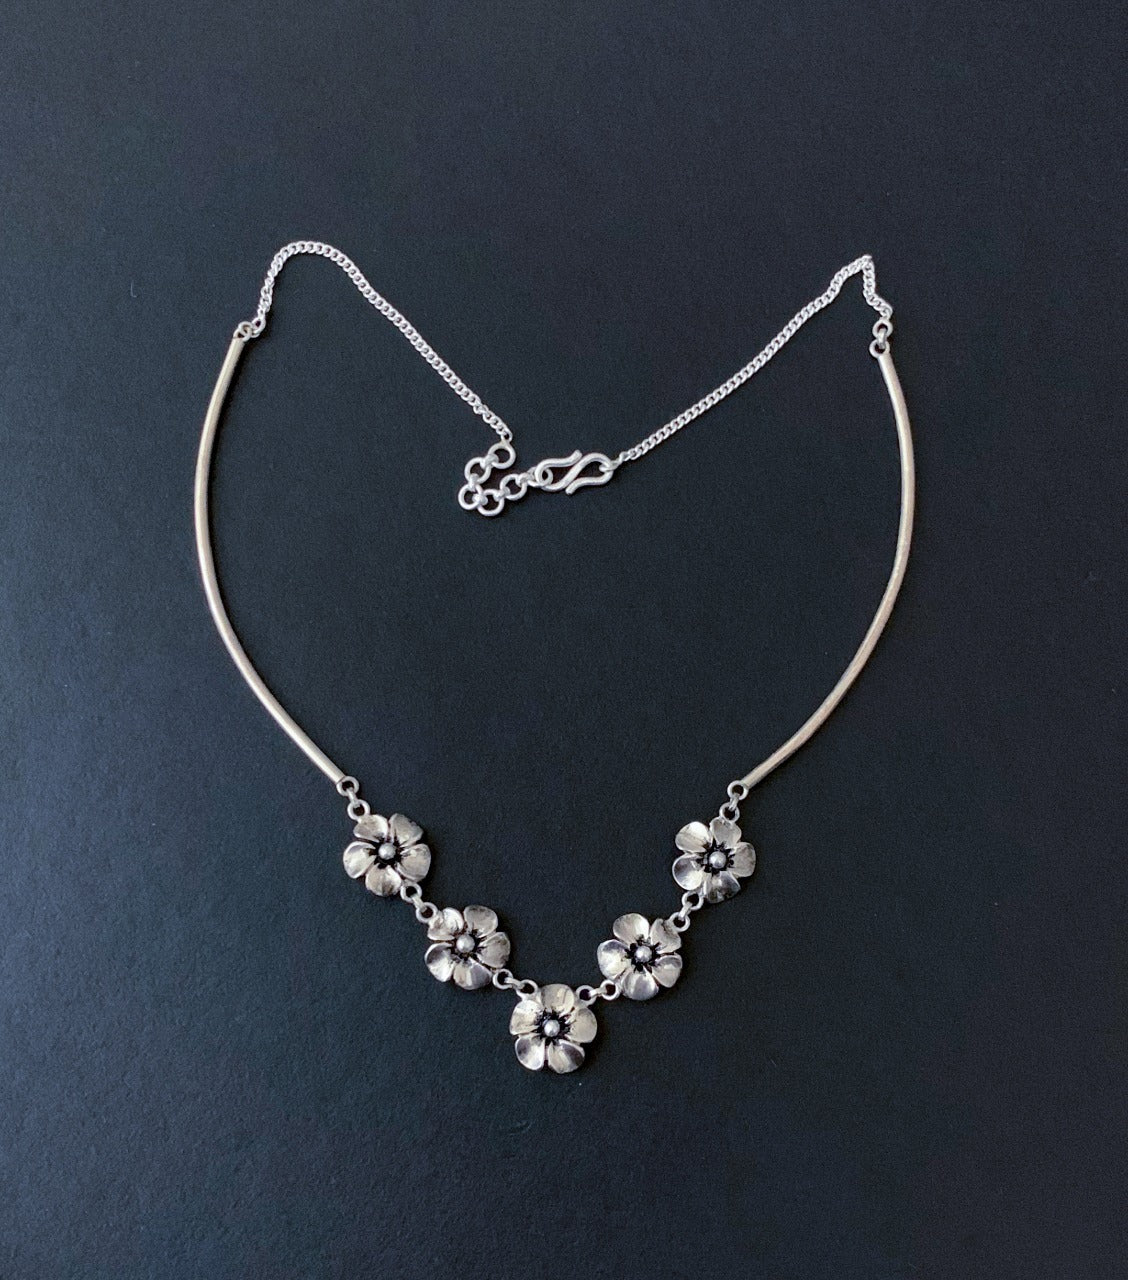 Handmade silver casting flower design lightweight necklace